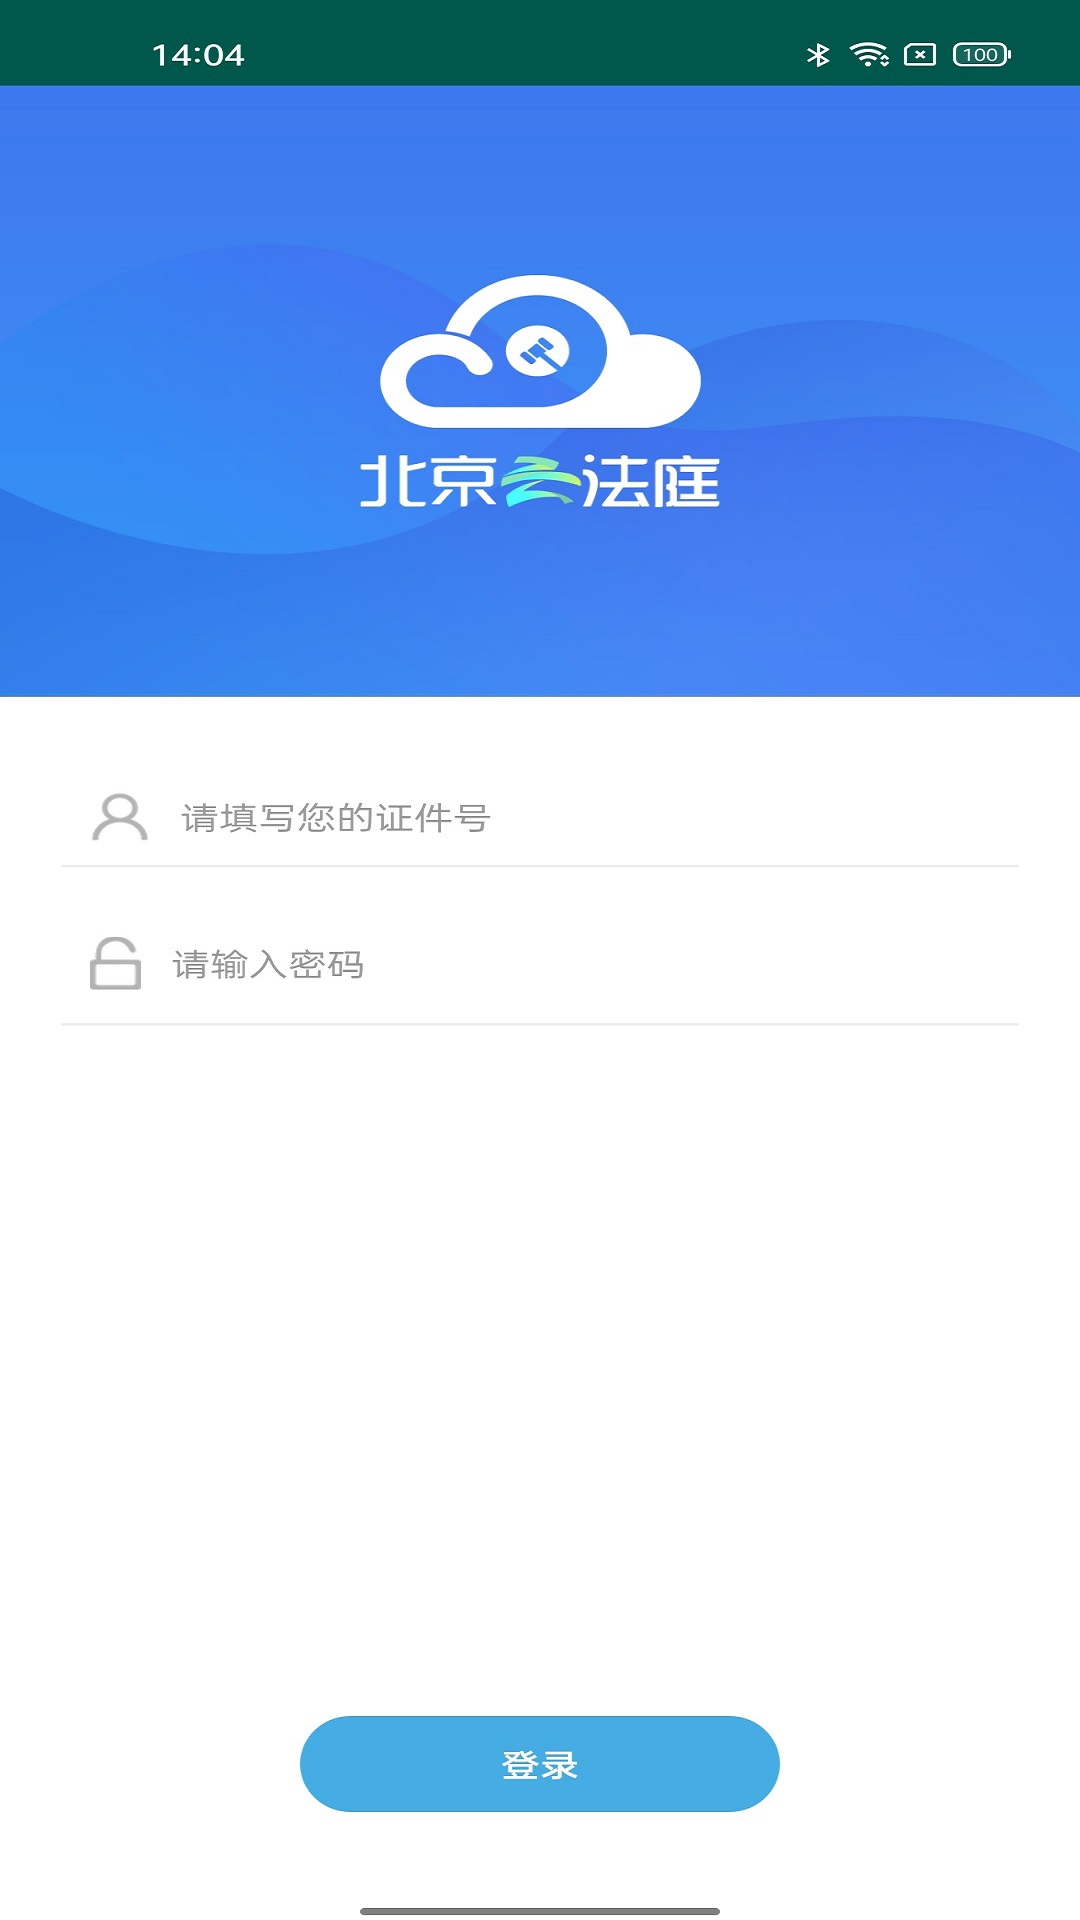 北京云法庭apphttps://img.96kaifa.com/d/file/asoft/202304050526/202231715571986080.jpg